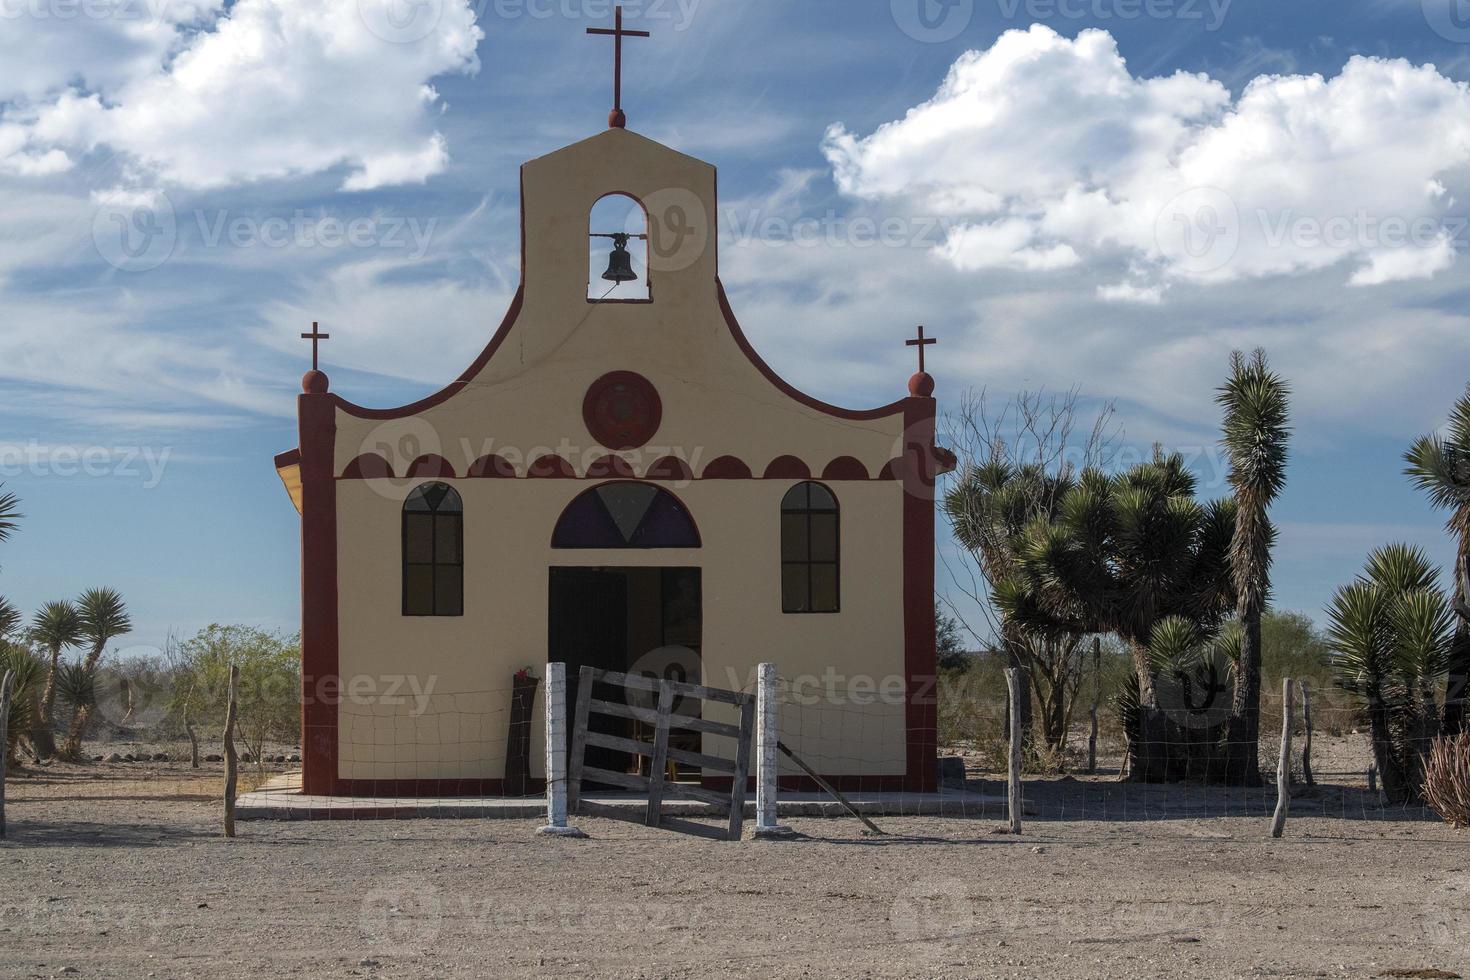 iglesia del desierto de baja california sur 11966414 Foto de stock en  Vecteezy